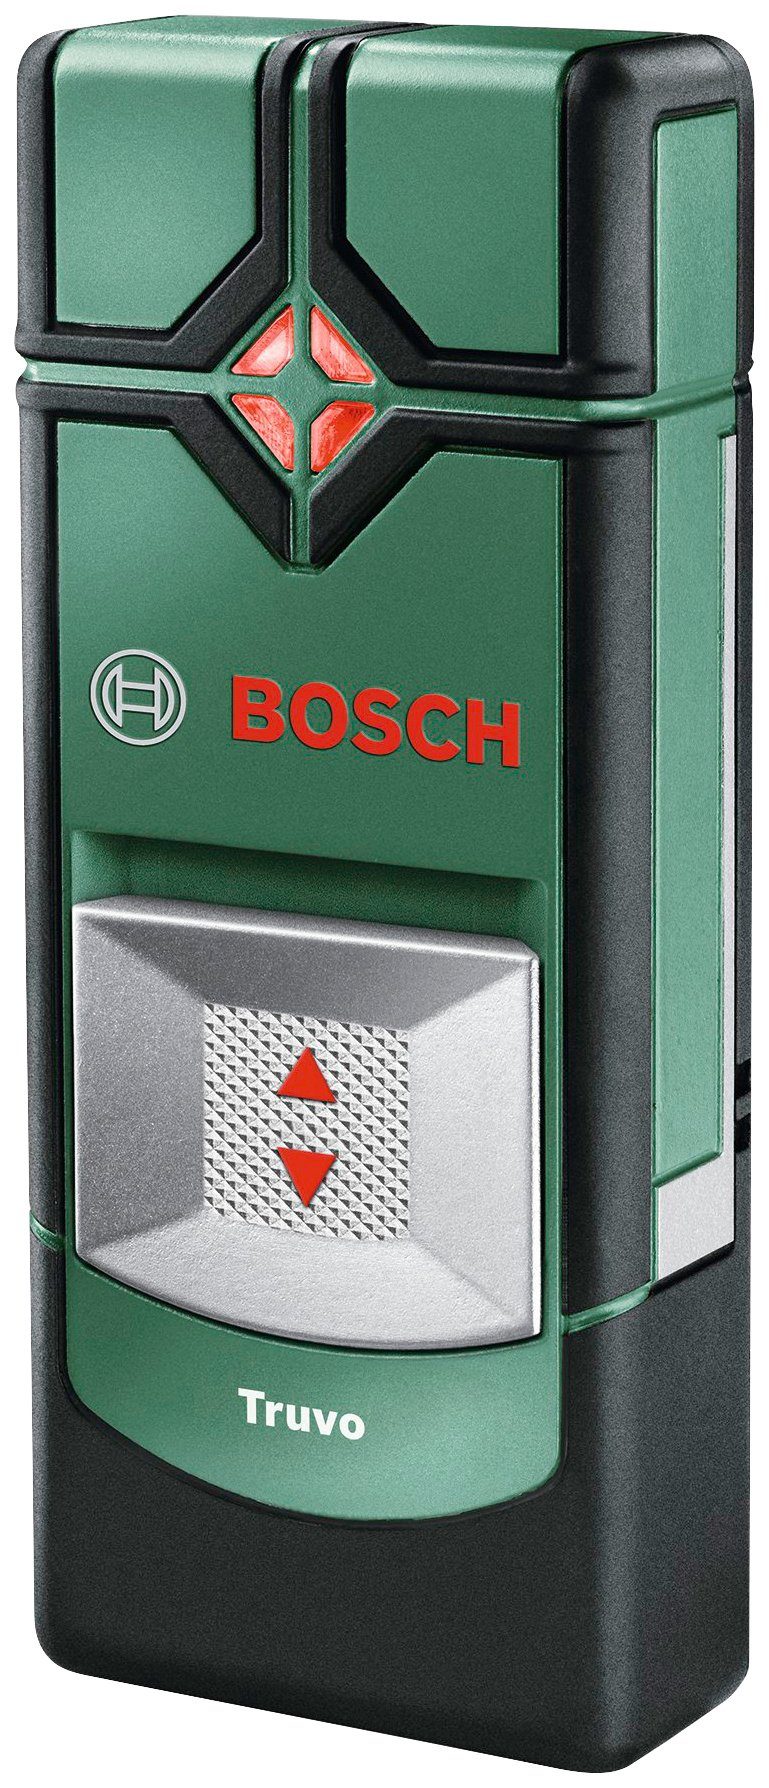 Bosch Home & Garden Leitungsortungsgerät Truvo, findet